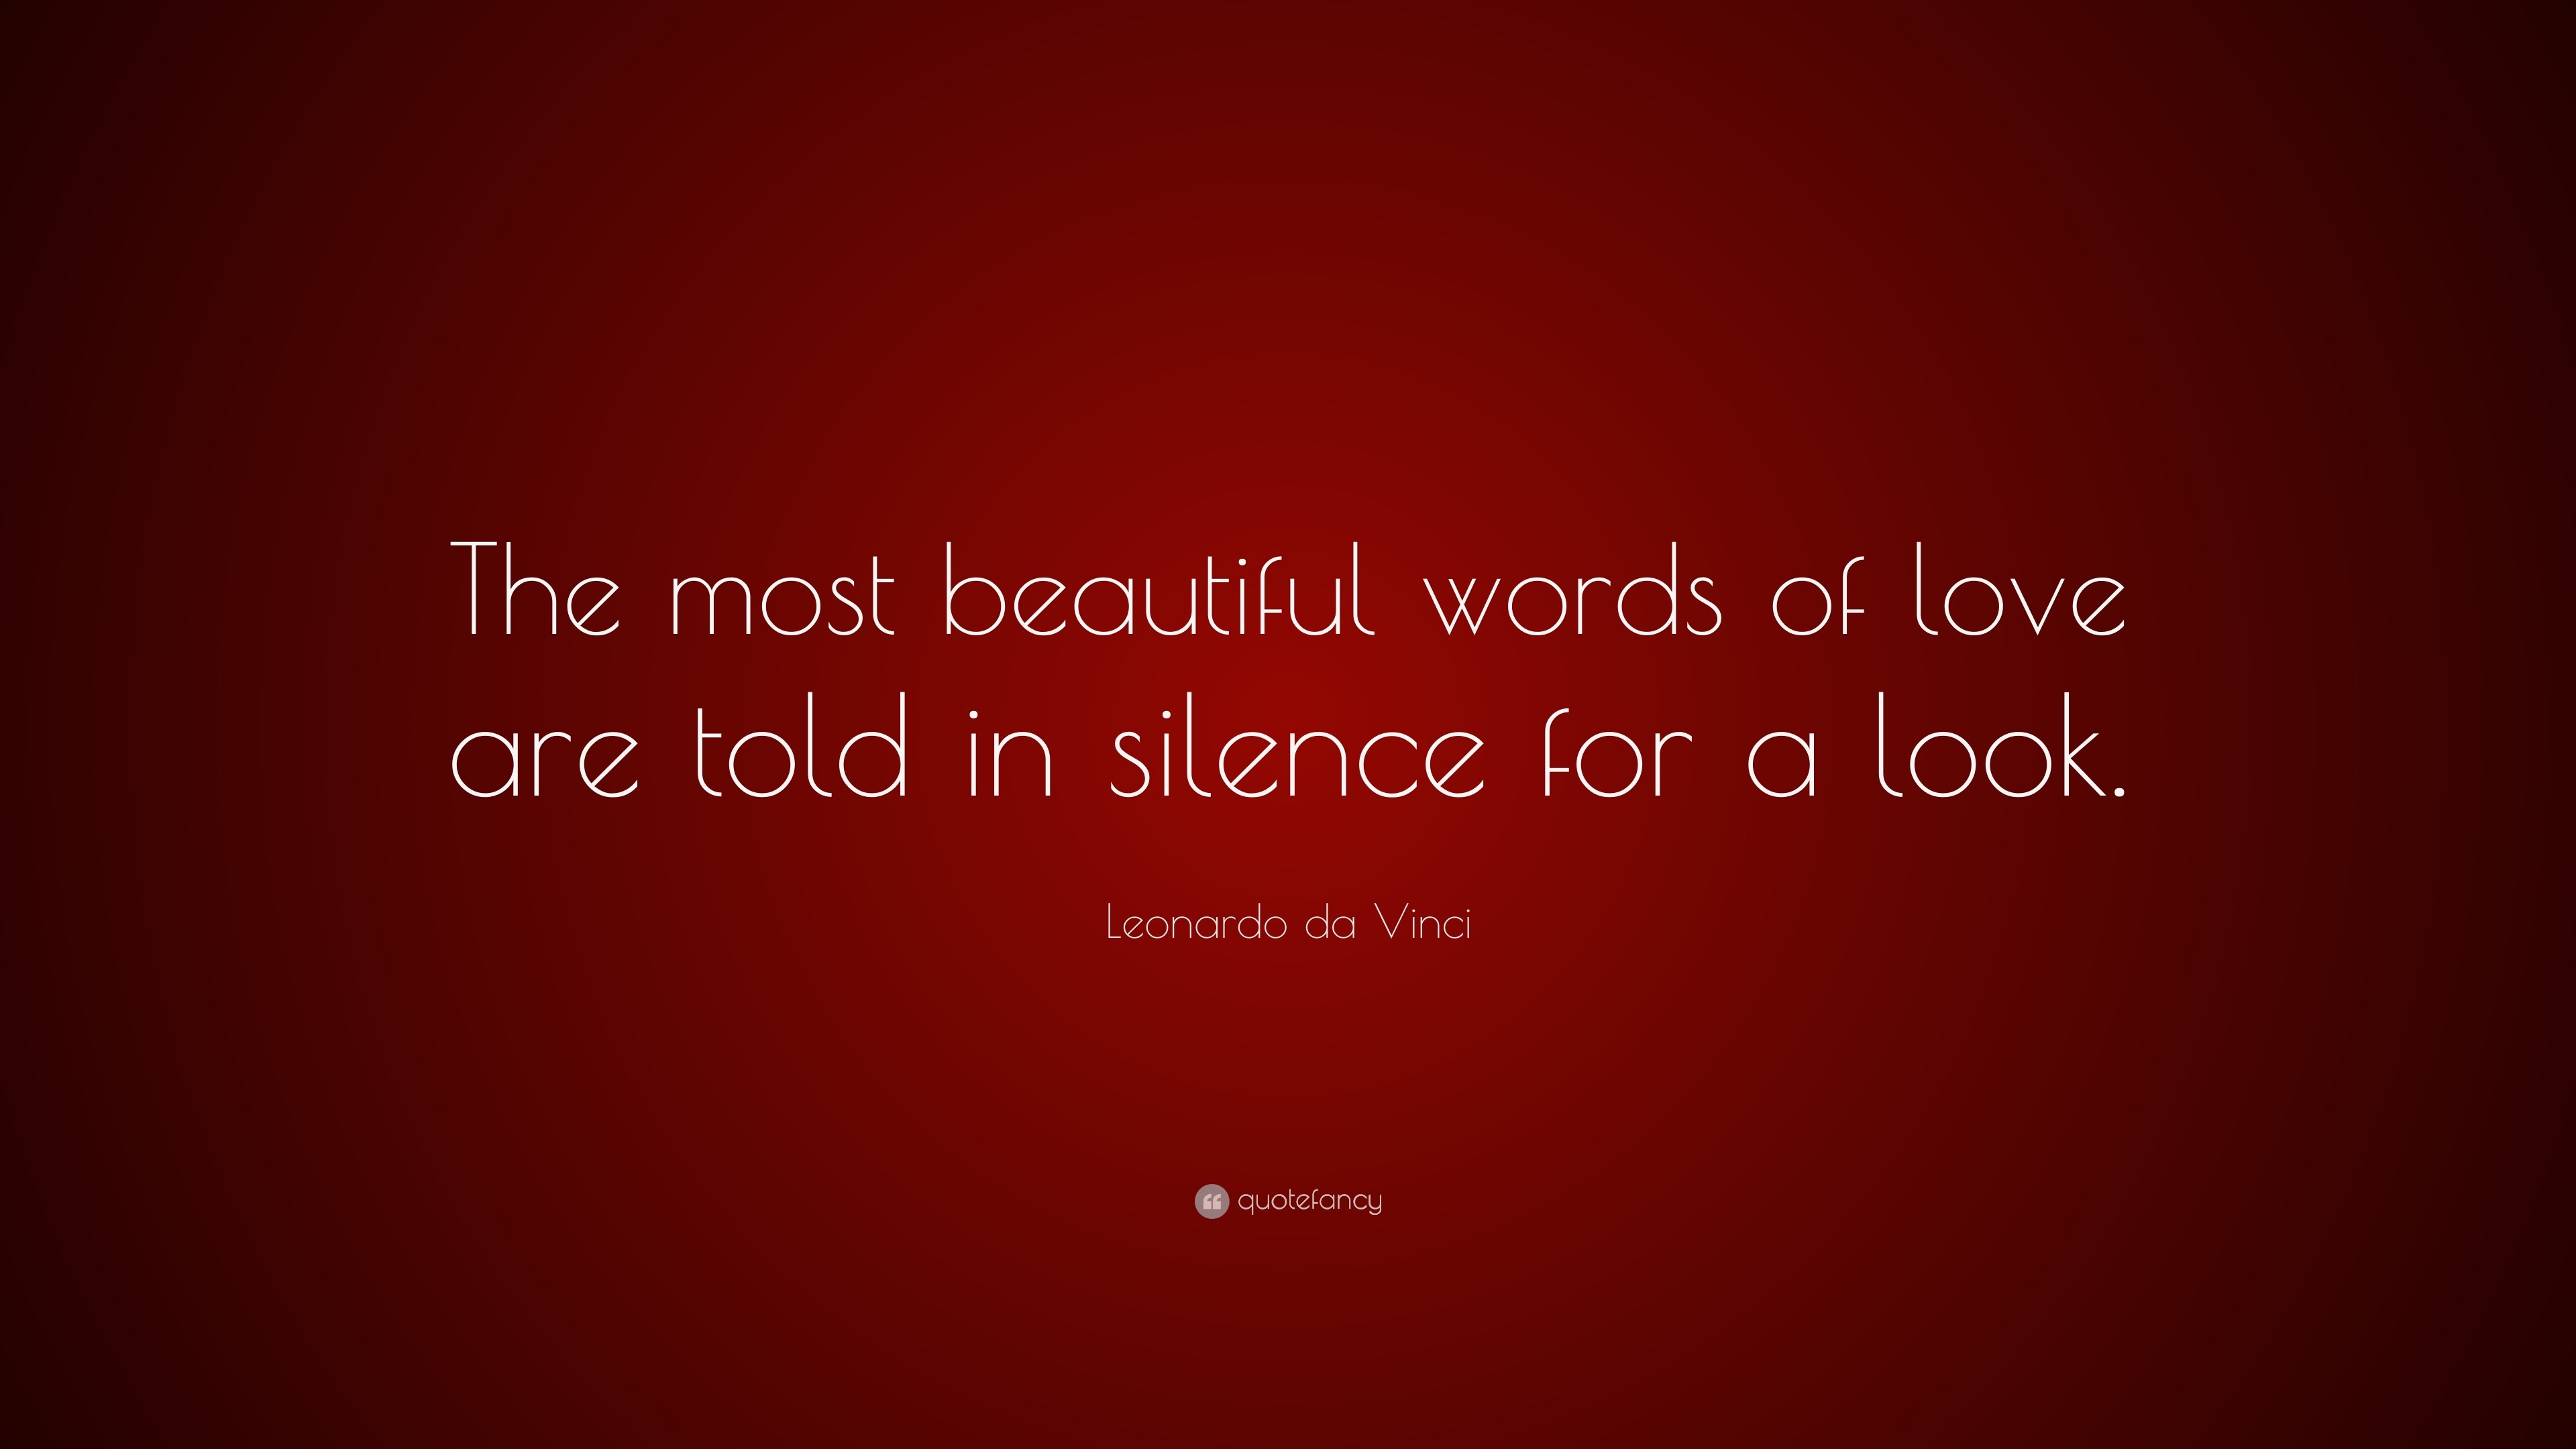 Leonardo da Vinci Quotes (100 wallpapers) - Quotefancy